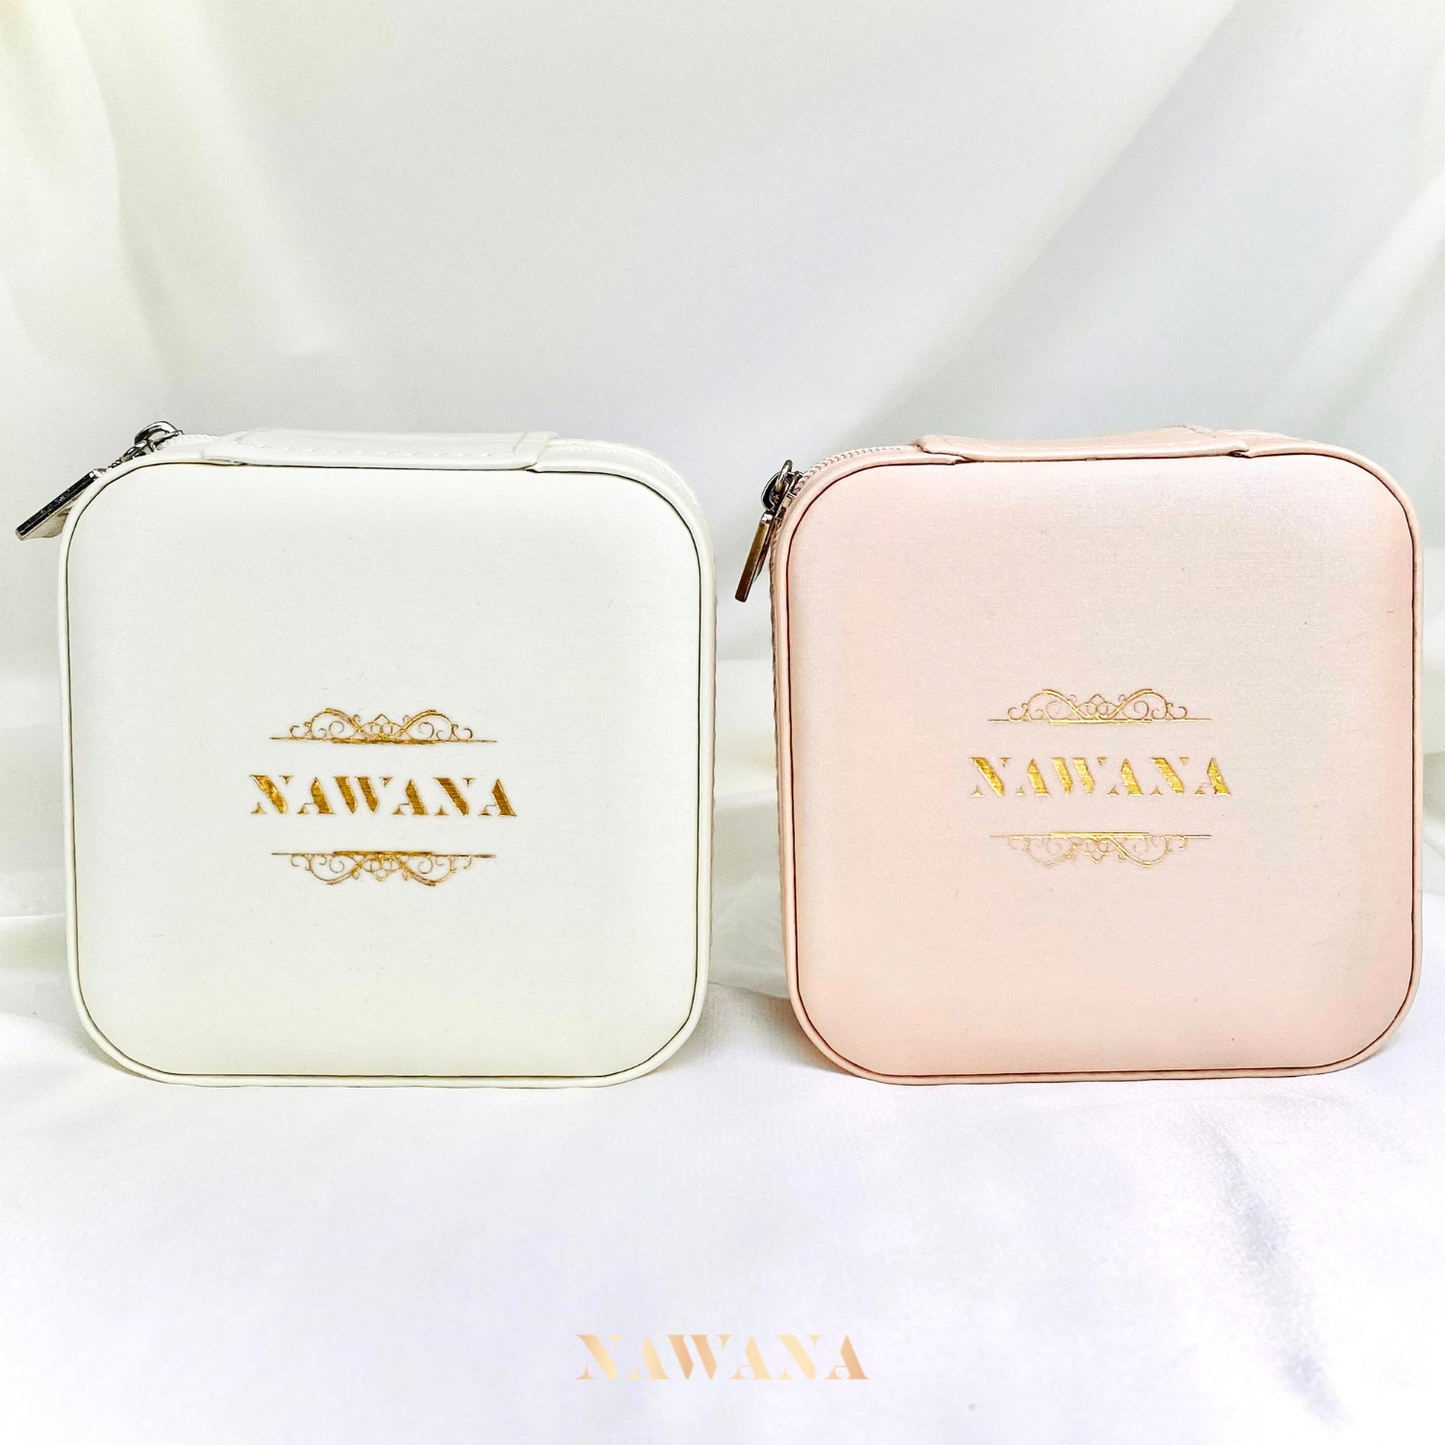 Nawana Exclusive Jewellery Box (S)